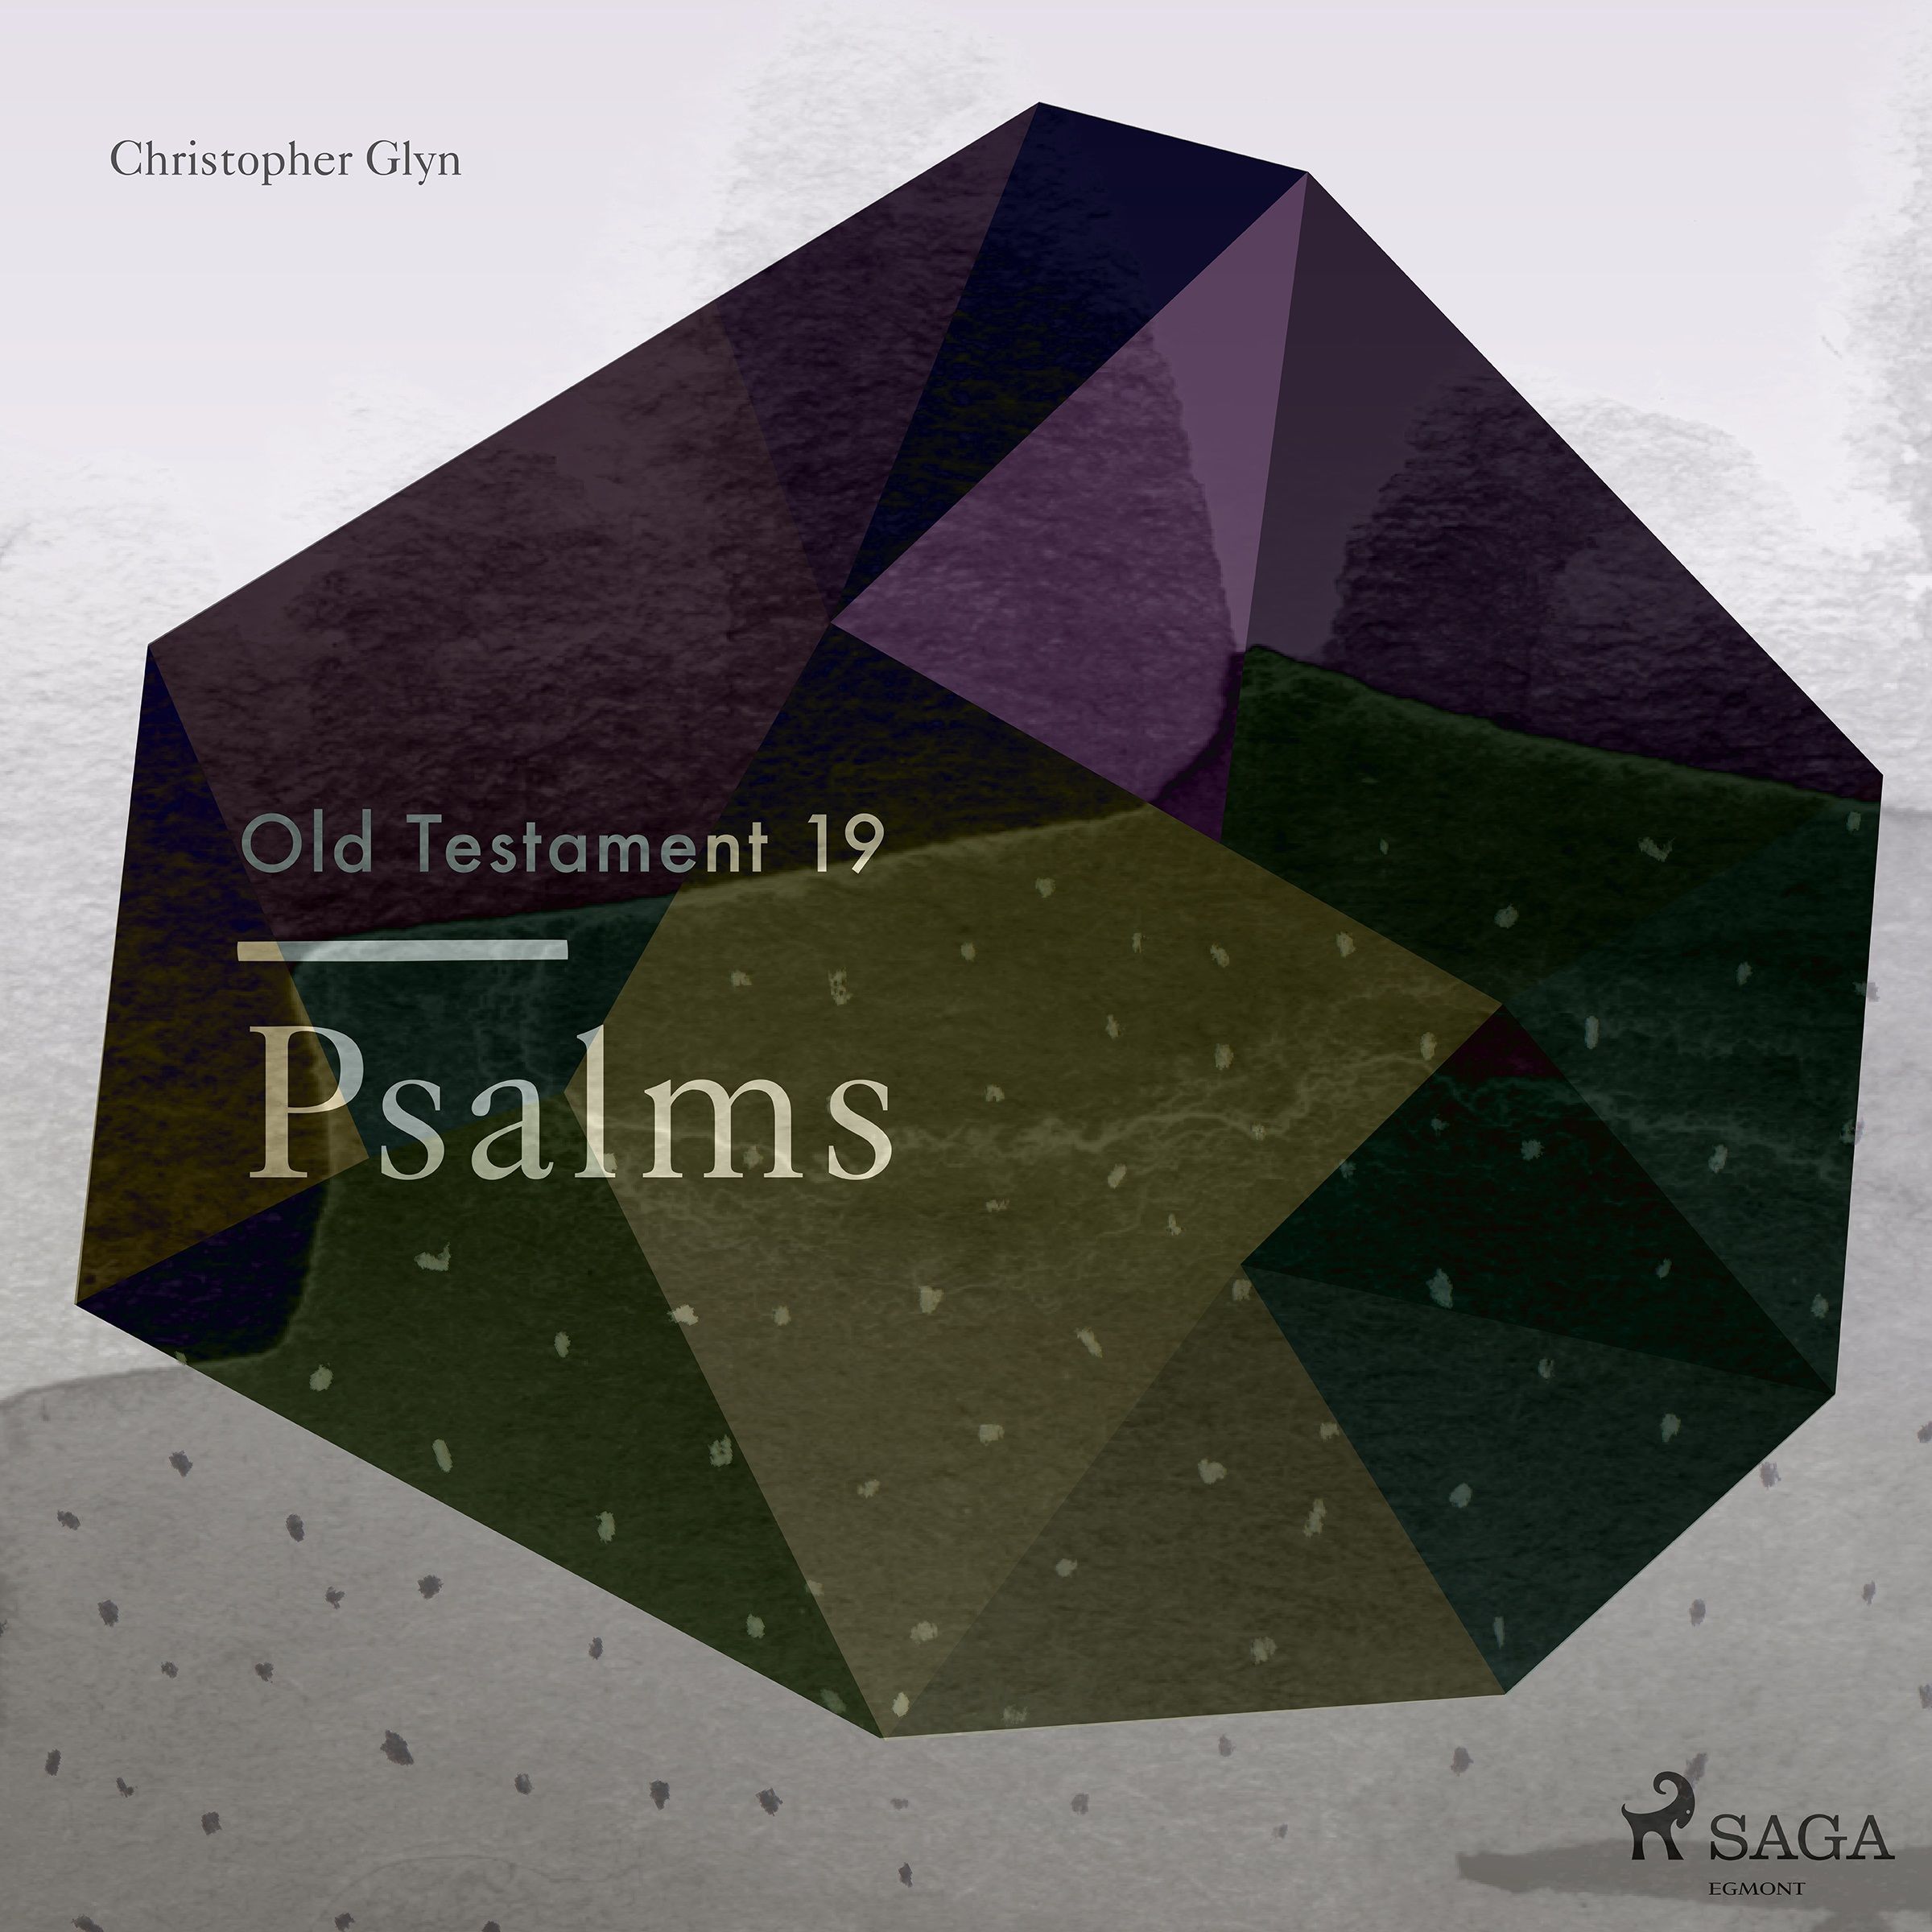 The Old Testament 19 - Psalms, ljudbok av Christopher Glyn